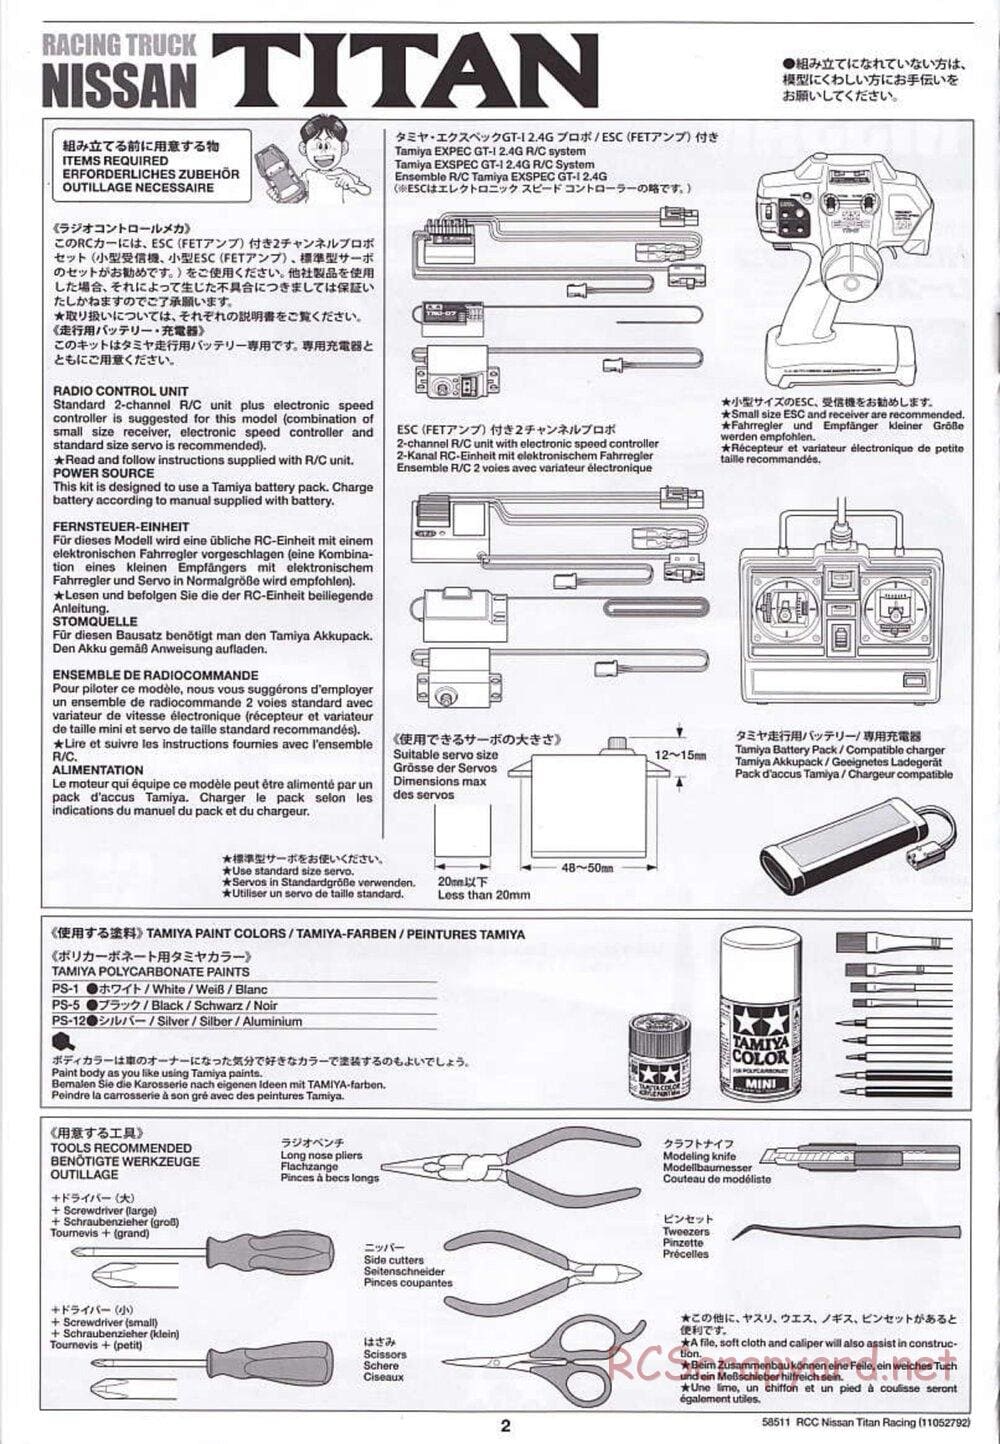 Tamiya - Nissan Titan Chassis - Manual - Page 2